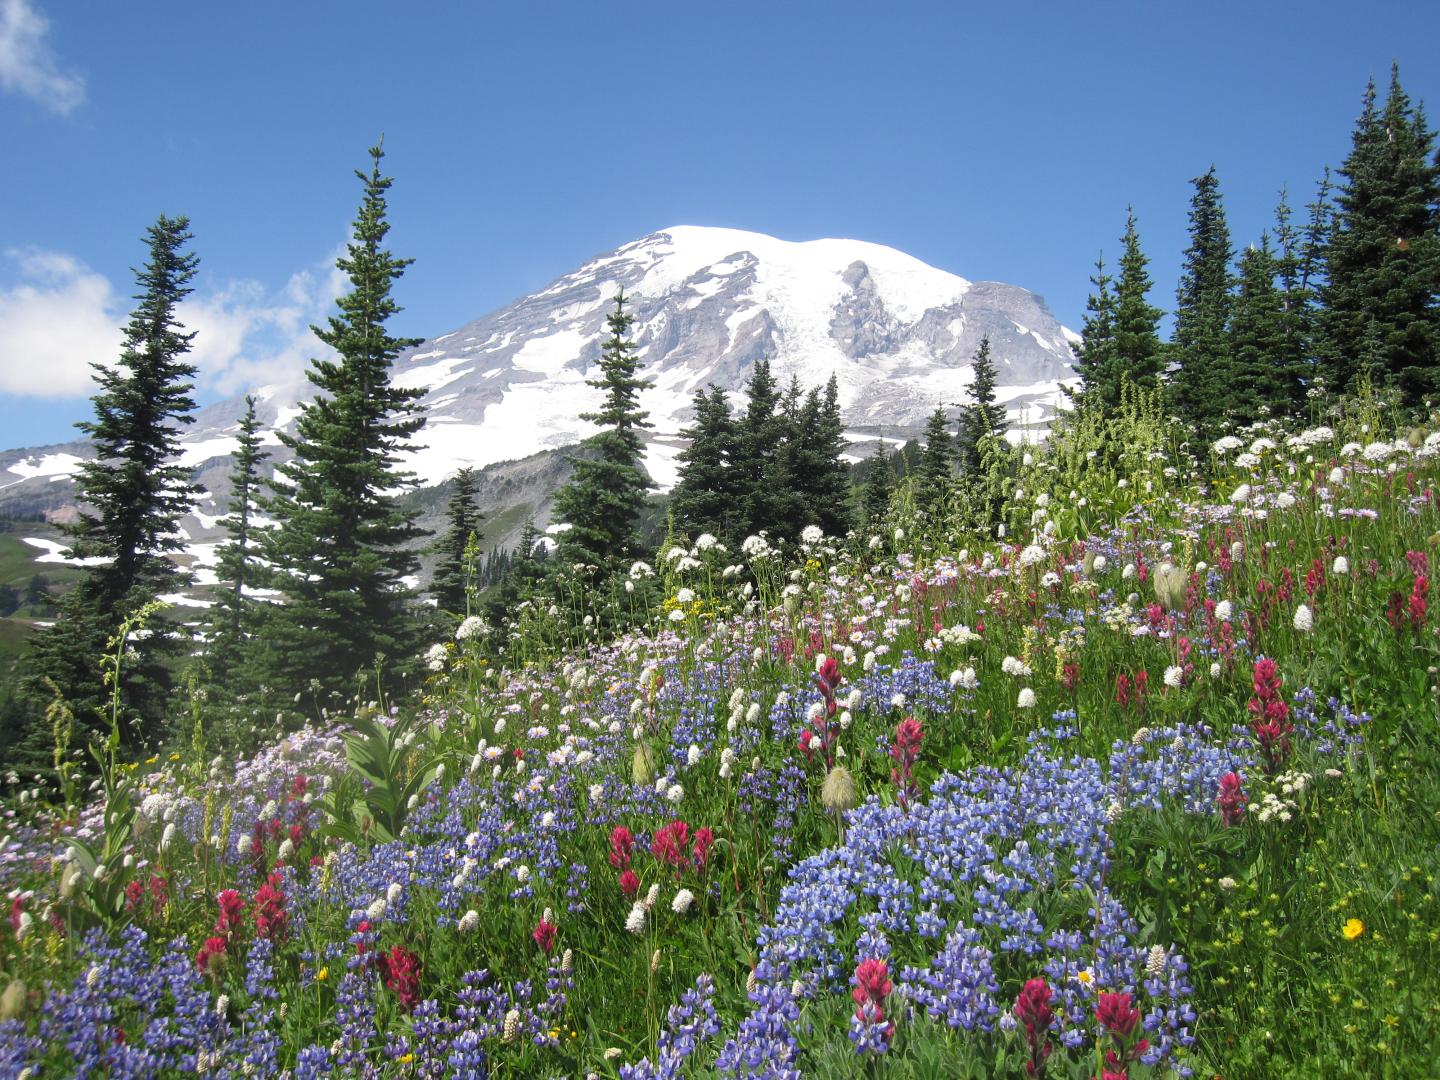 Mount Rainier Wildflowers in the Summer